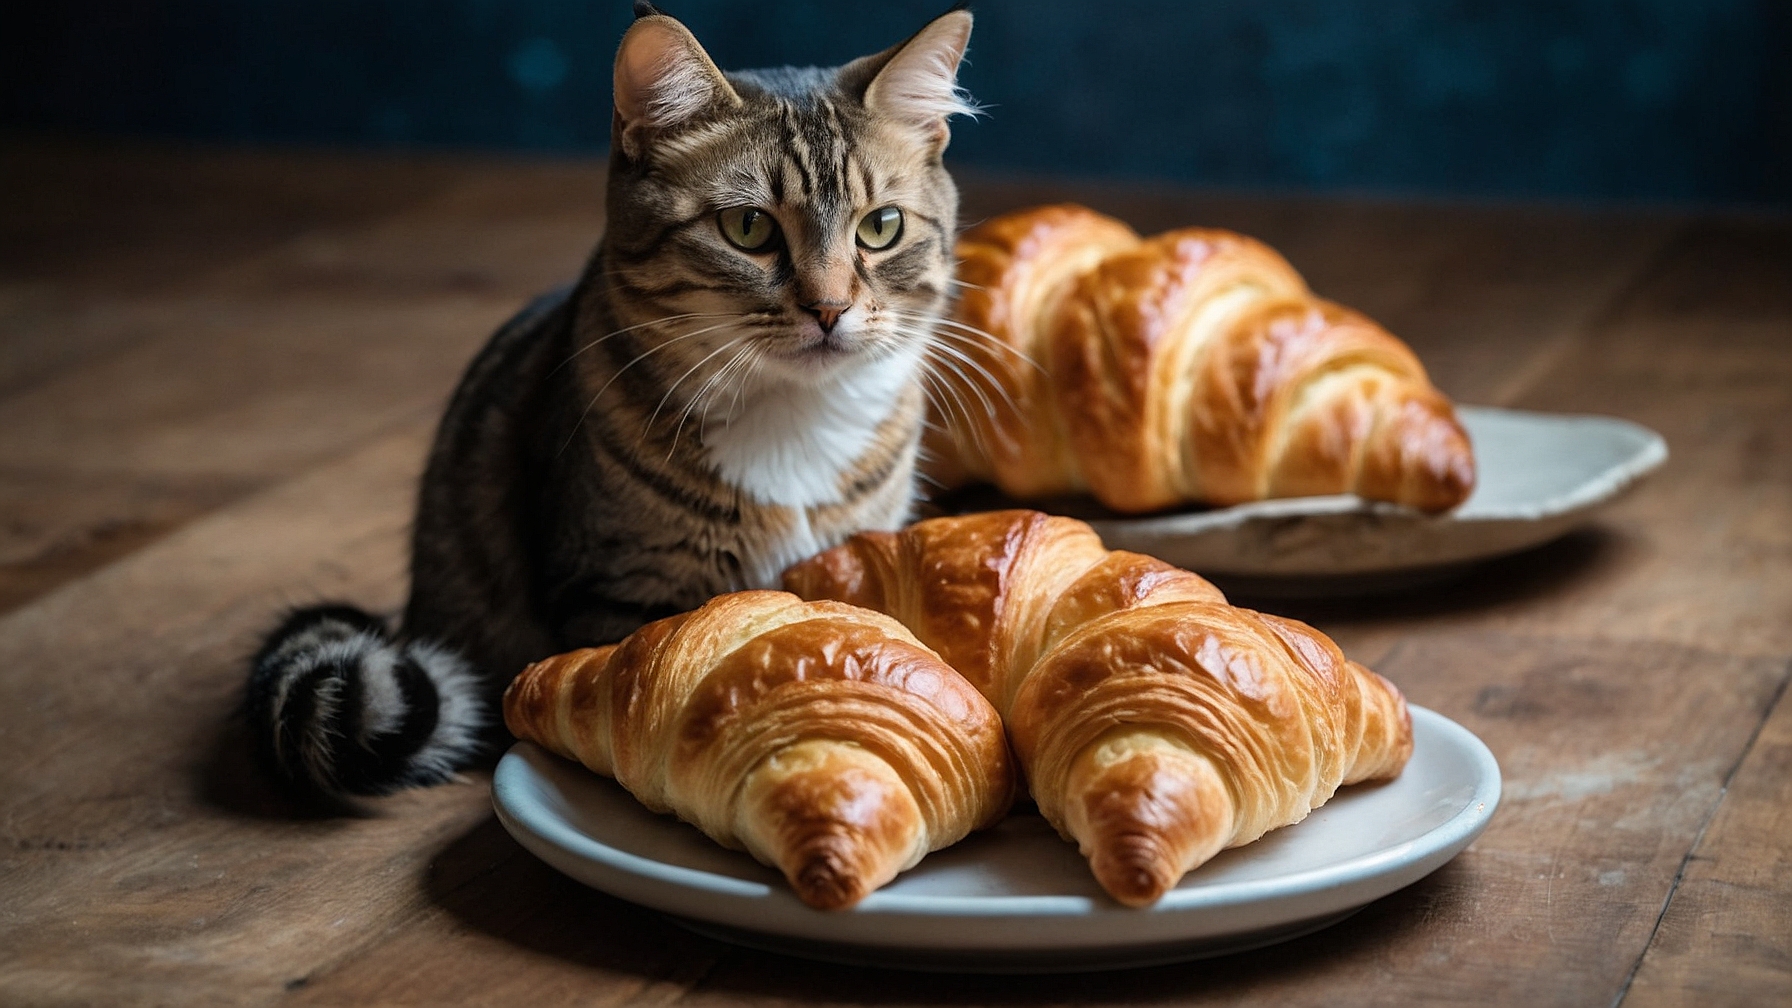 Can Cats Eat Croissants